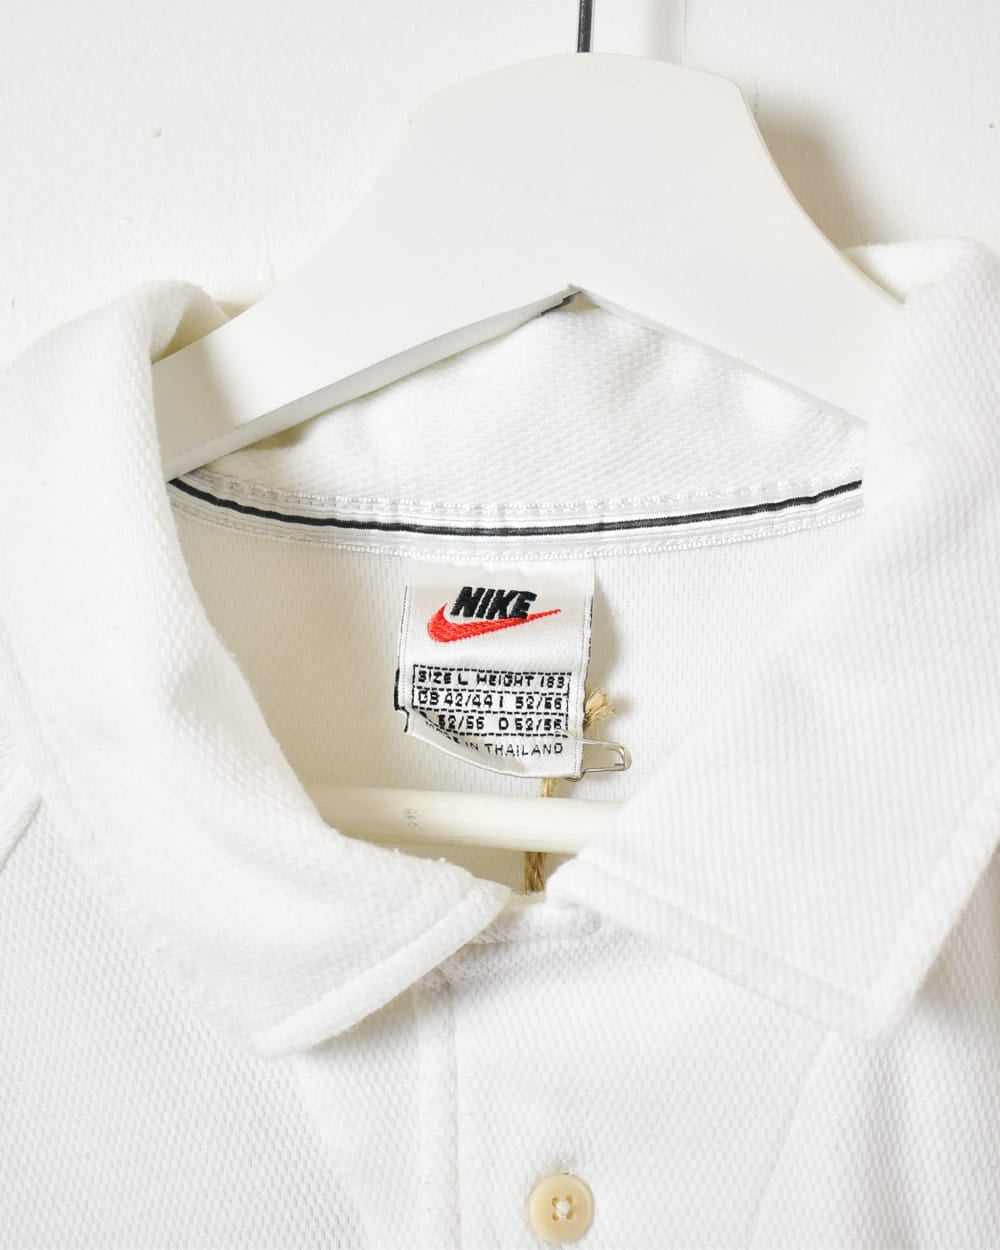 White Nike Challenge Court Polo Shirt - Large